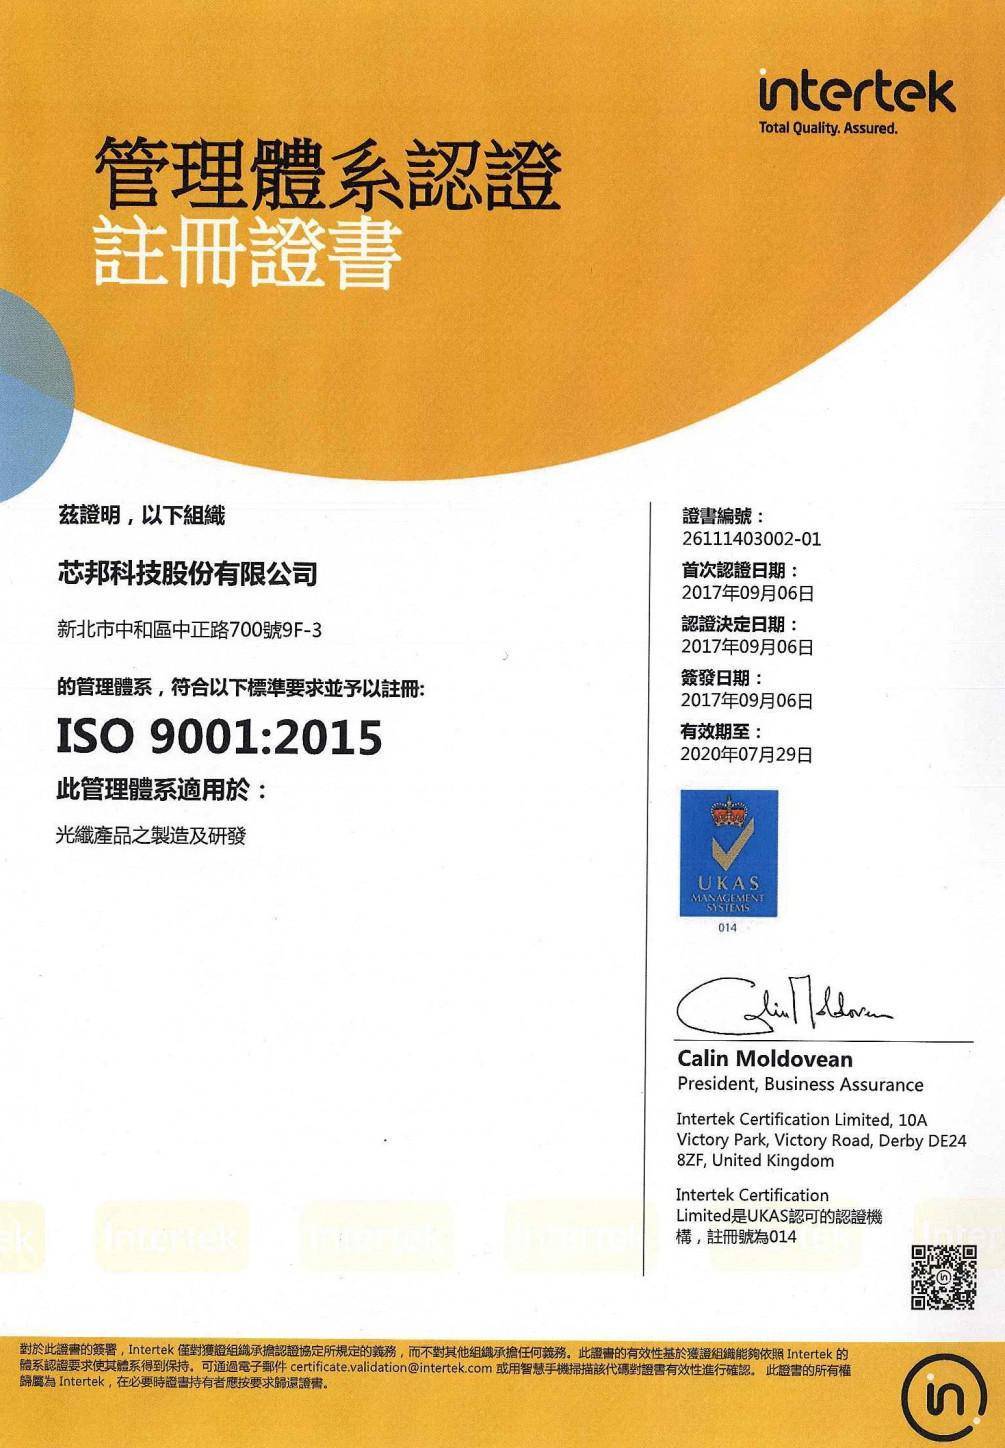 賀! 芯邦科技取得ISO 9001:2015 及 ISO 14001:2015雙認證